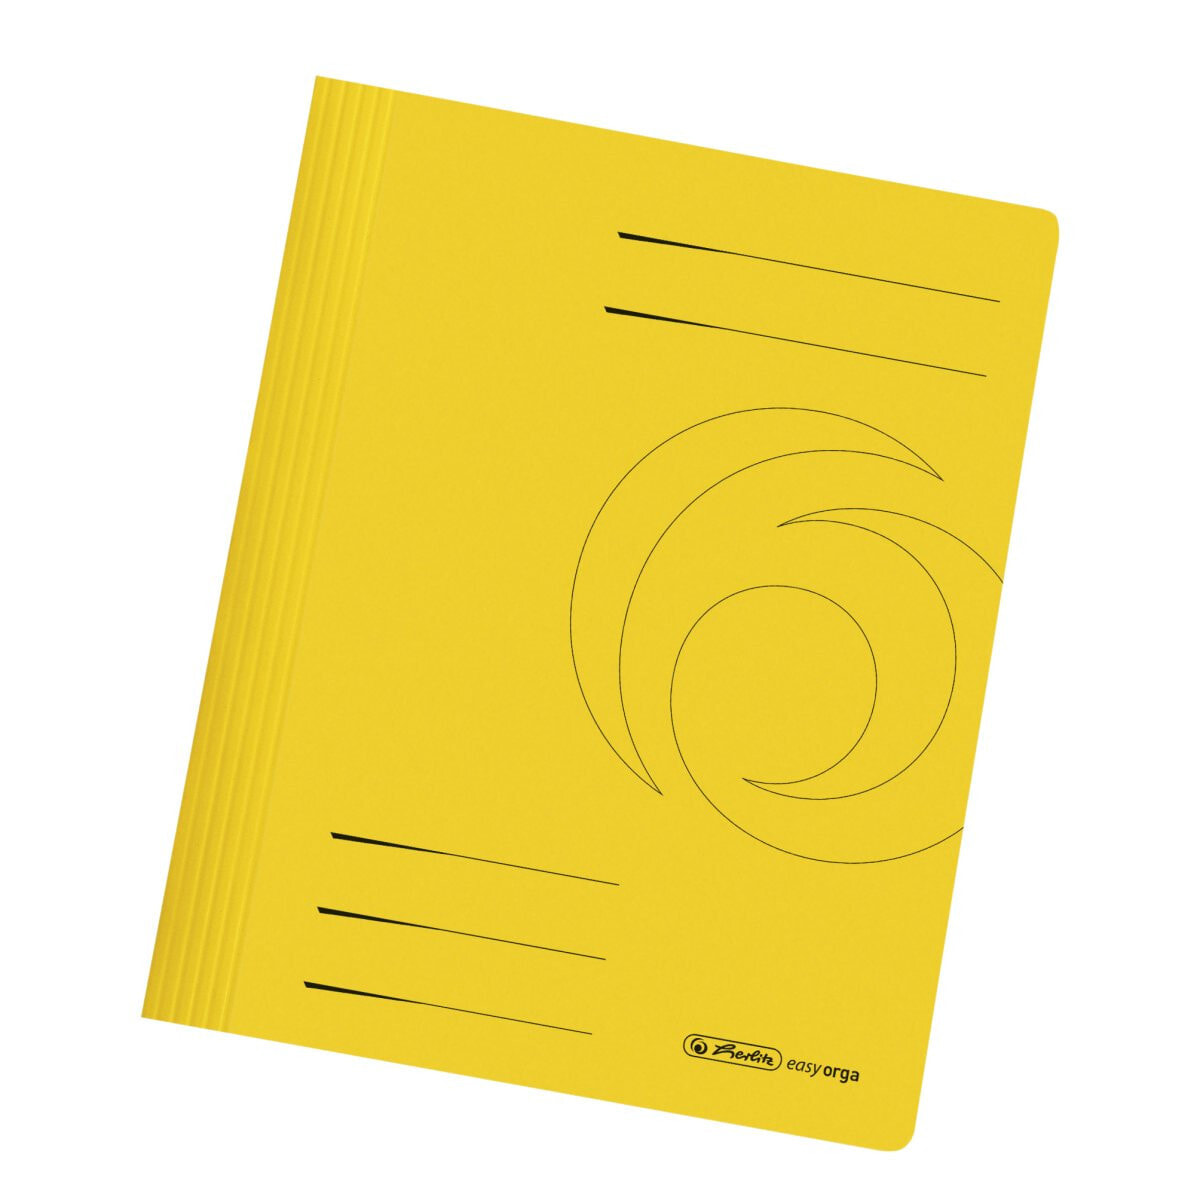 11034303 - Manila folder - A4 - Cardboard - Yellow - 1 pc(s)